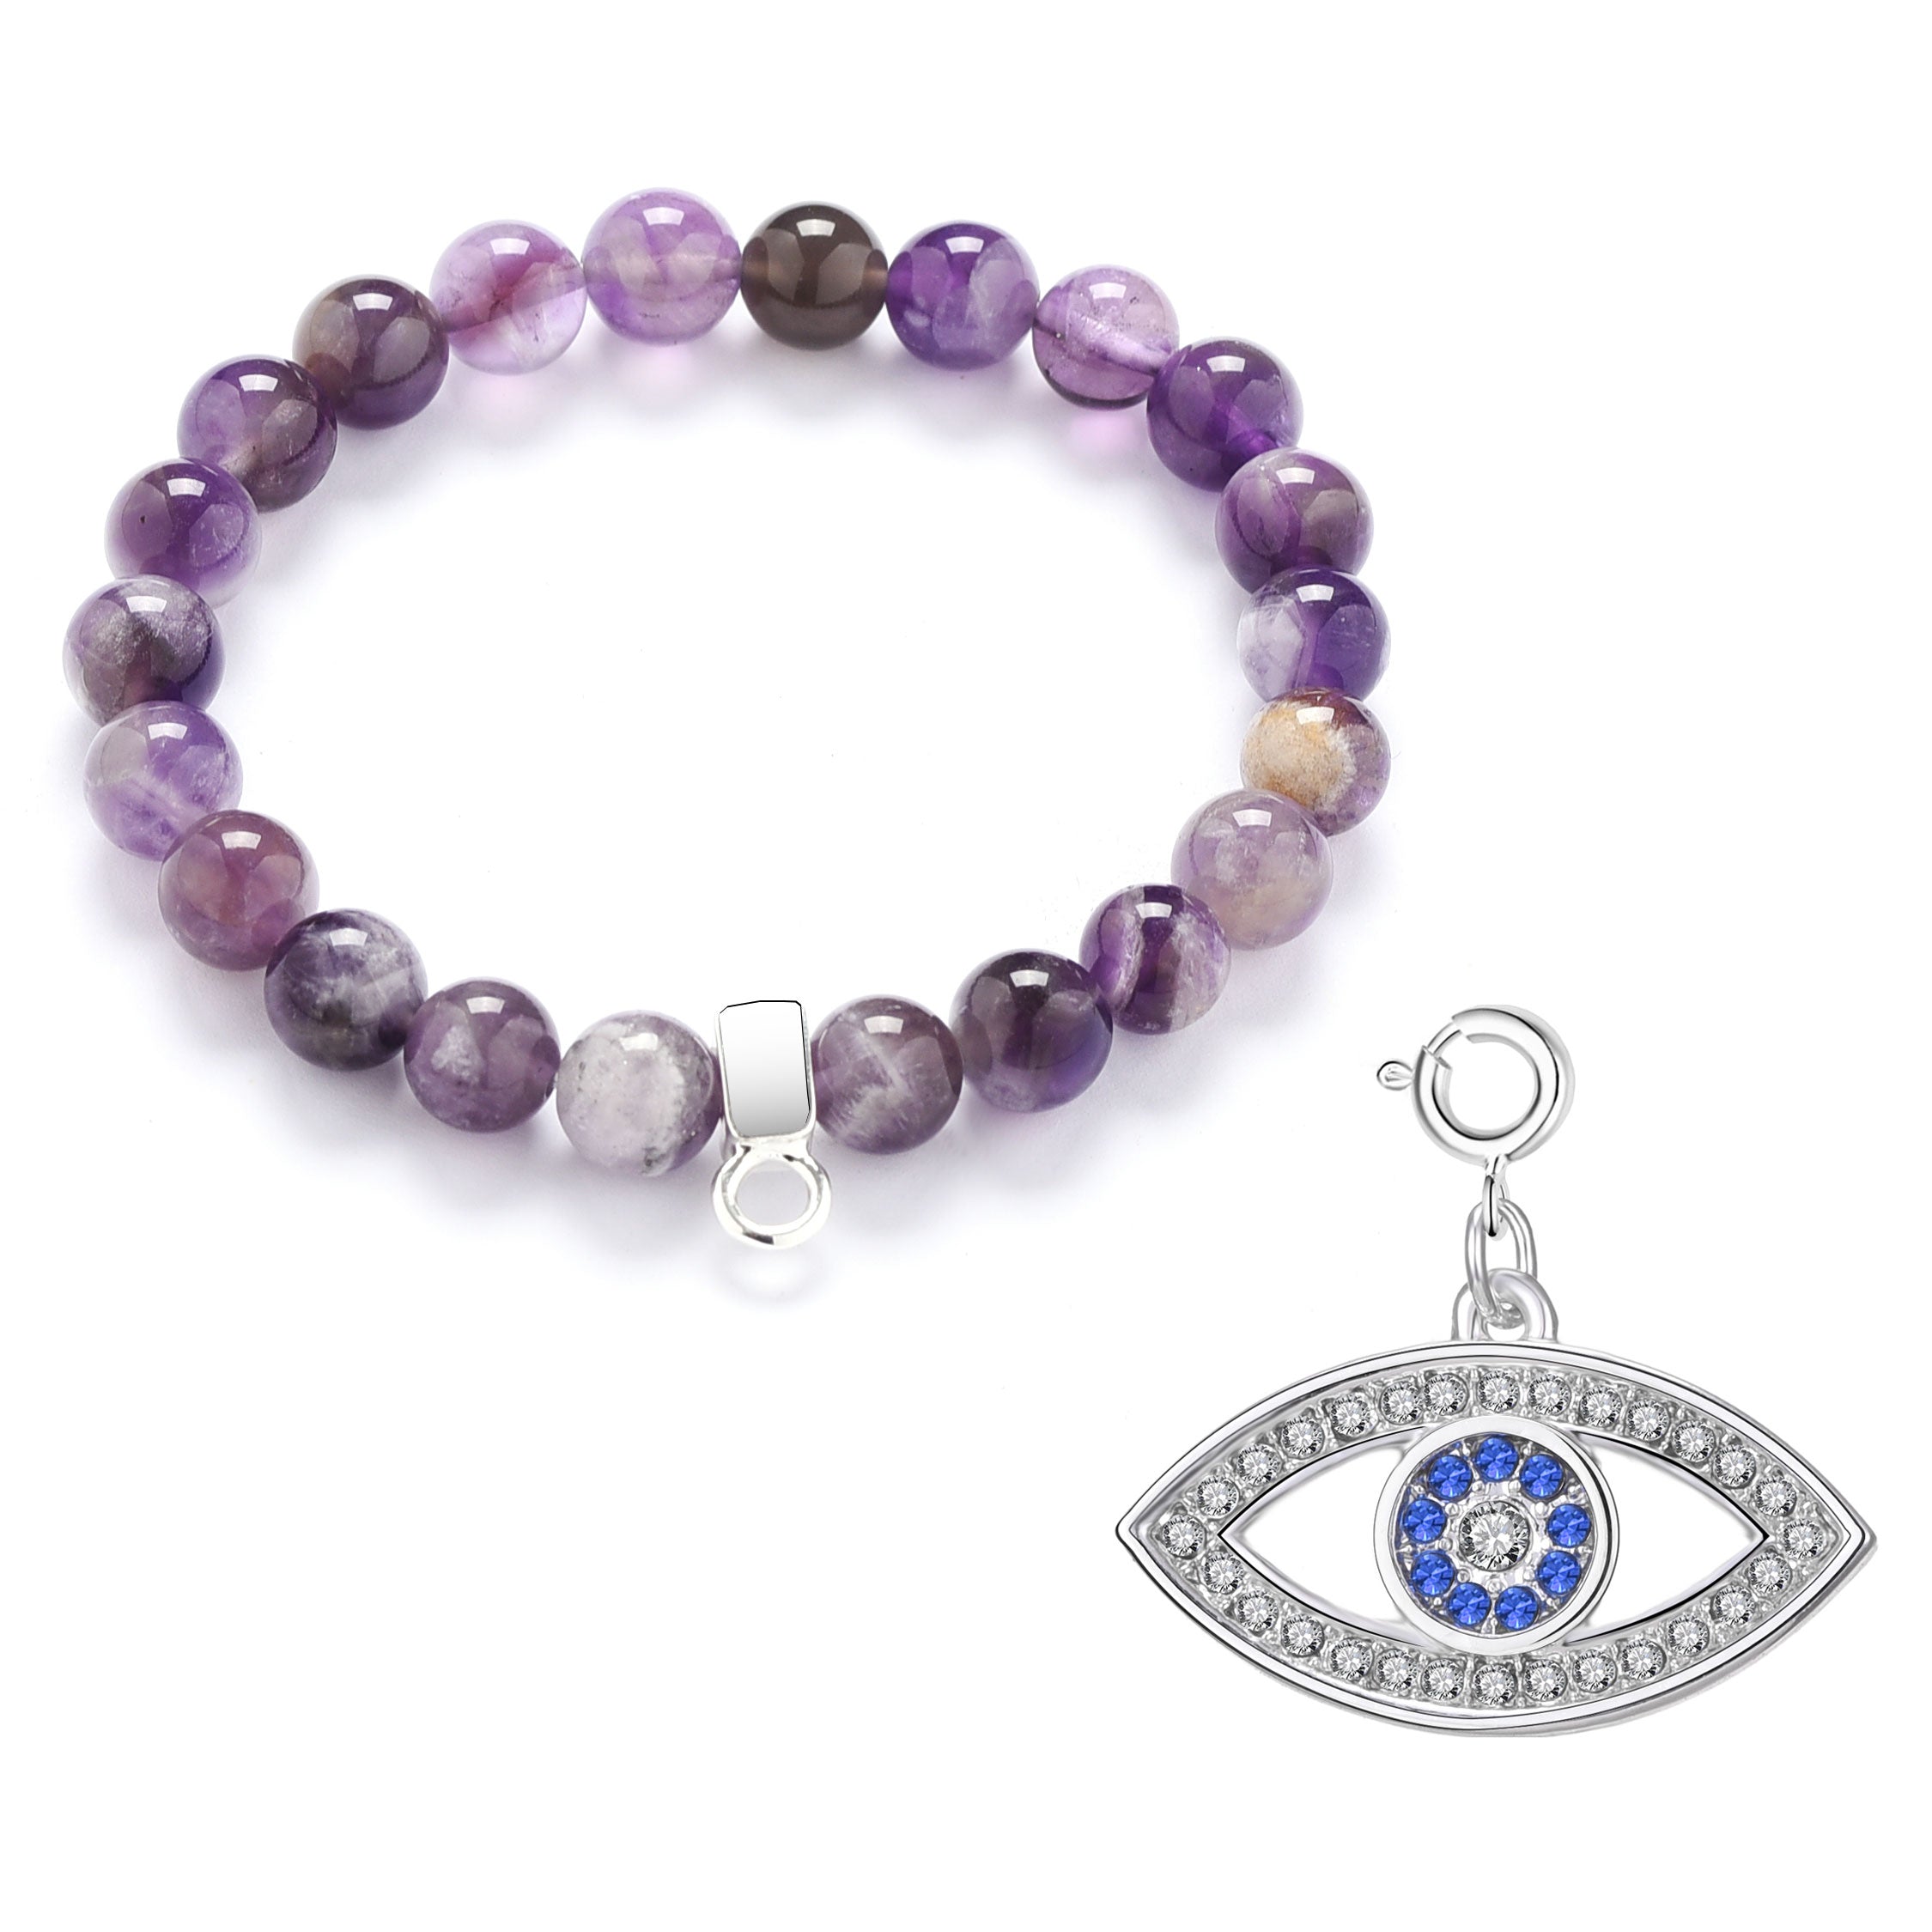 Amethyst Gemstone Stretch Bracelet with Charm Created with Zircondia® Crystals